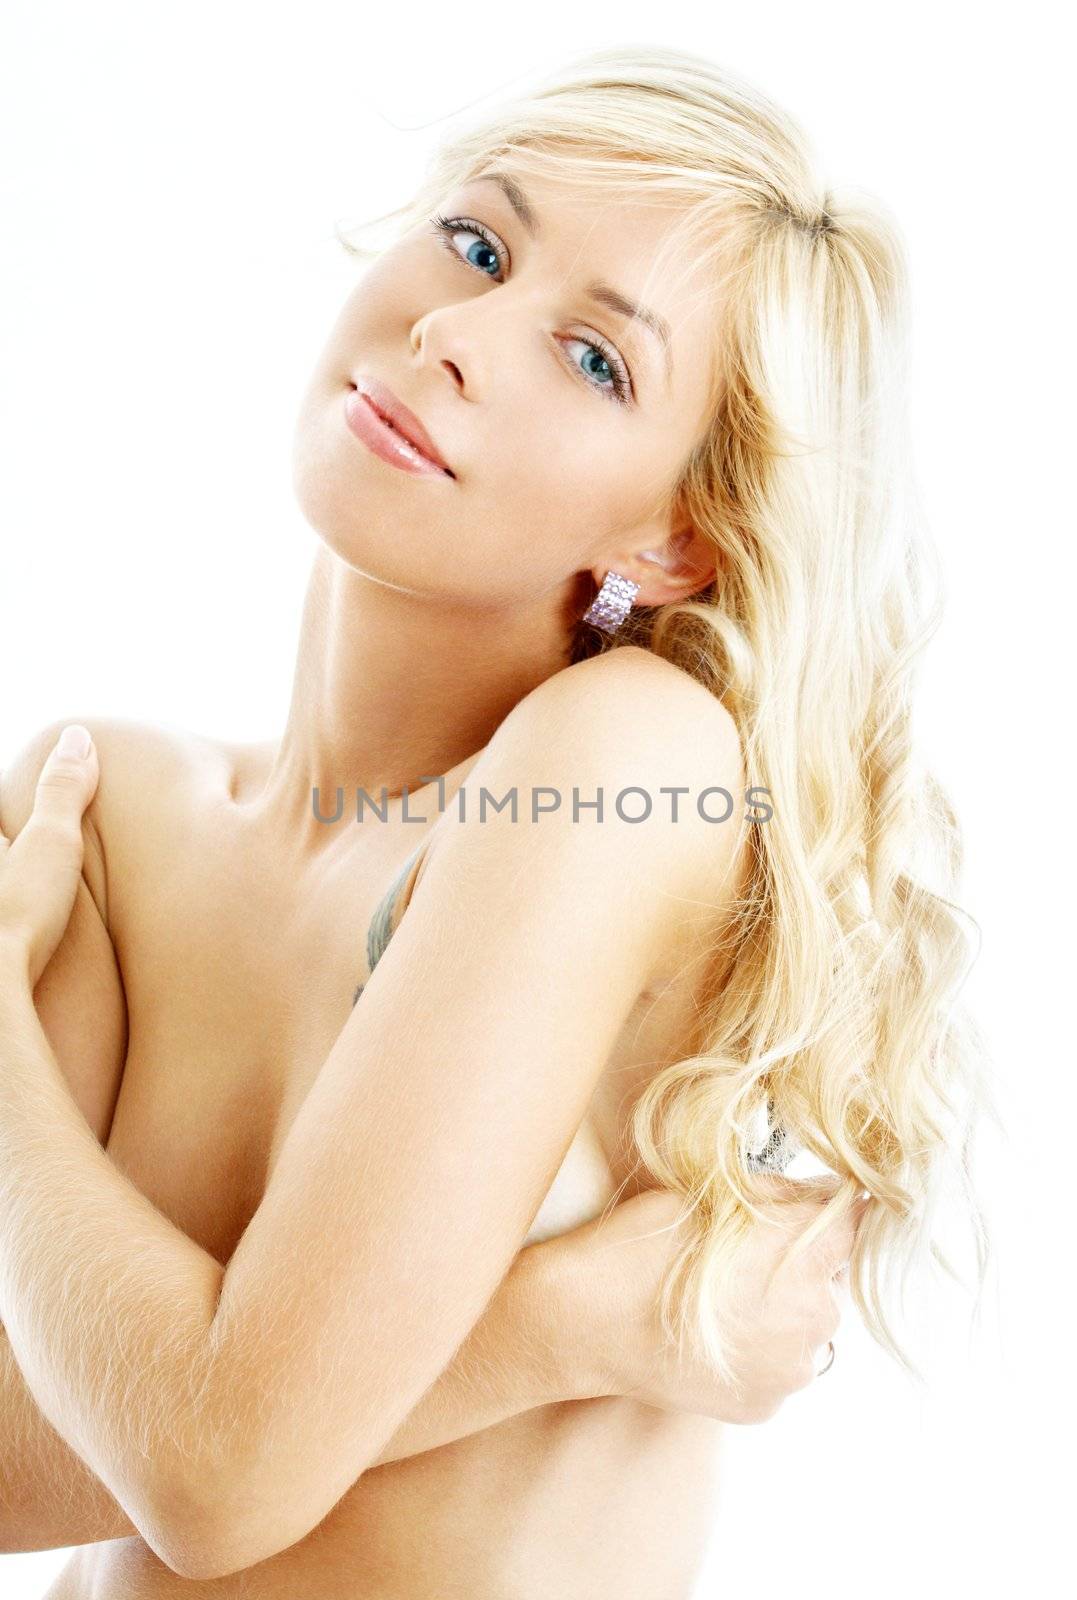 smiling topless blond #2 by dolgachov